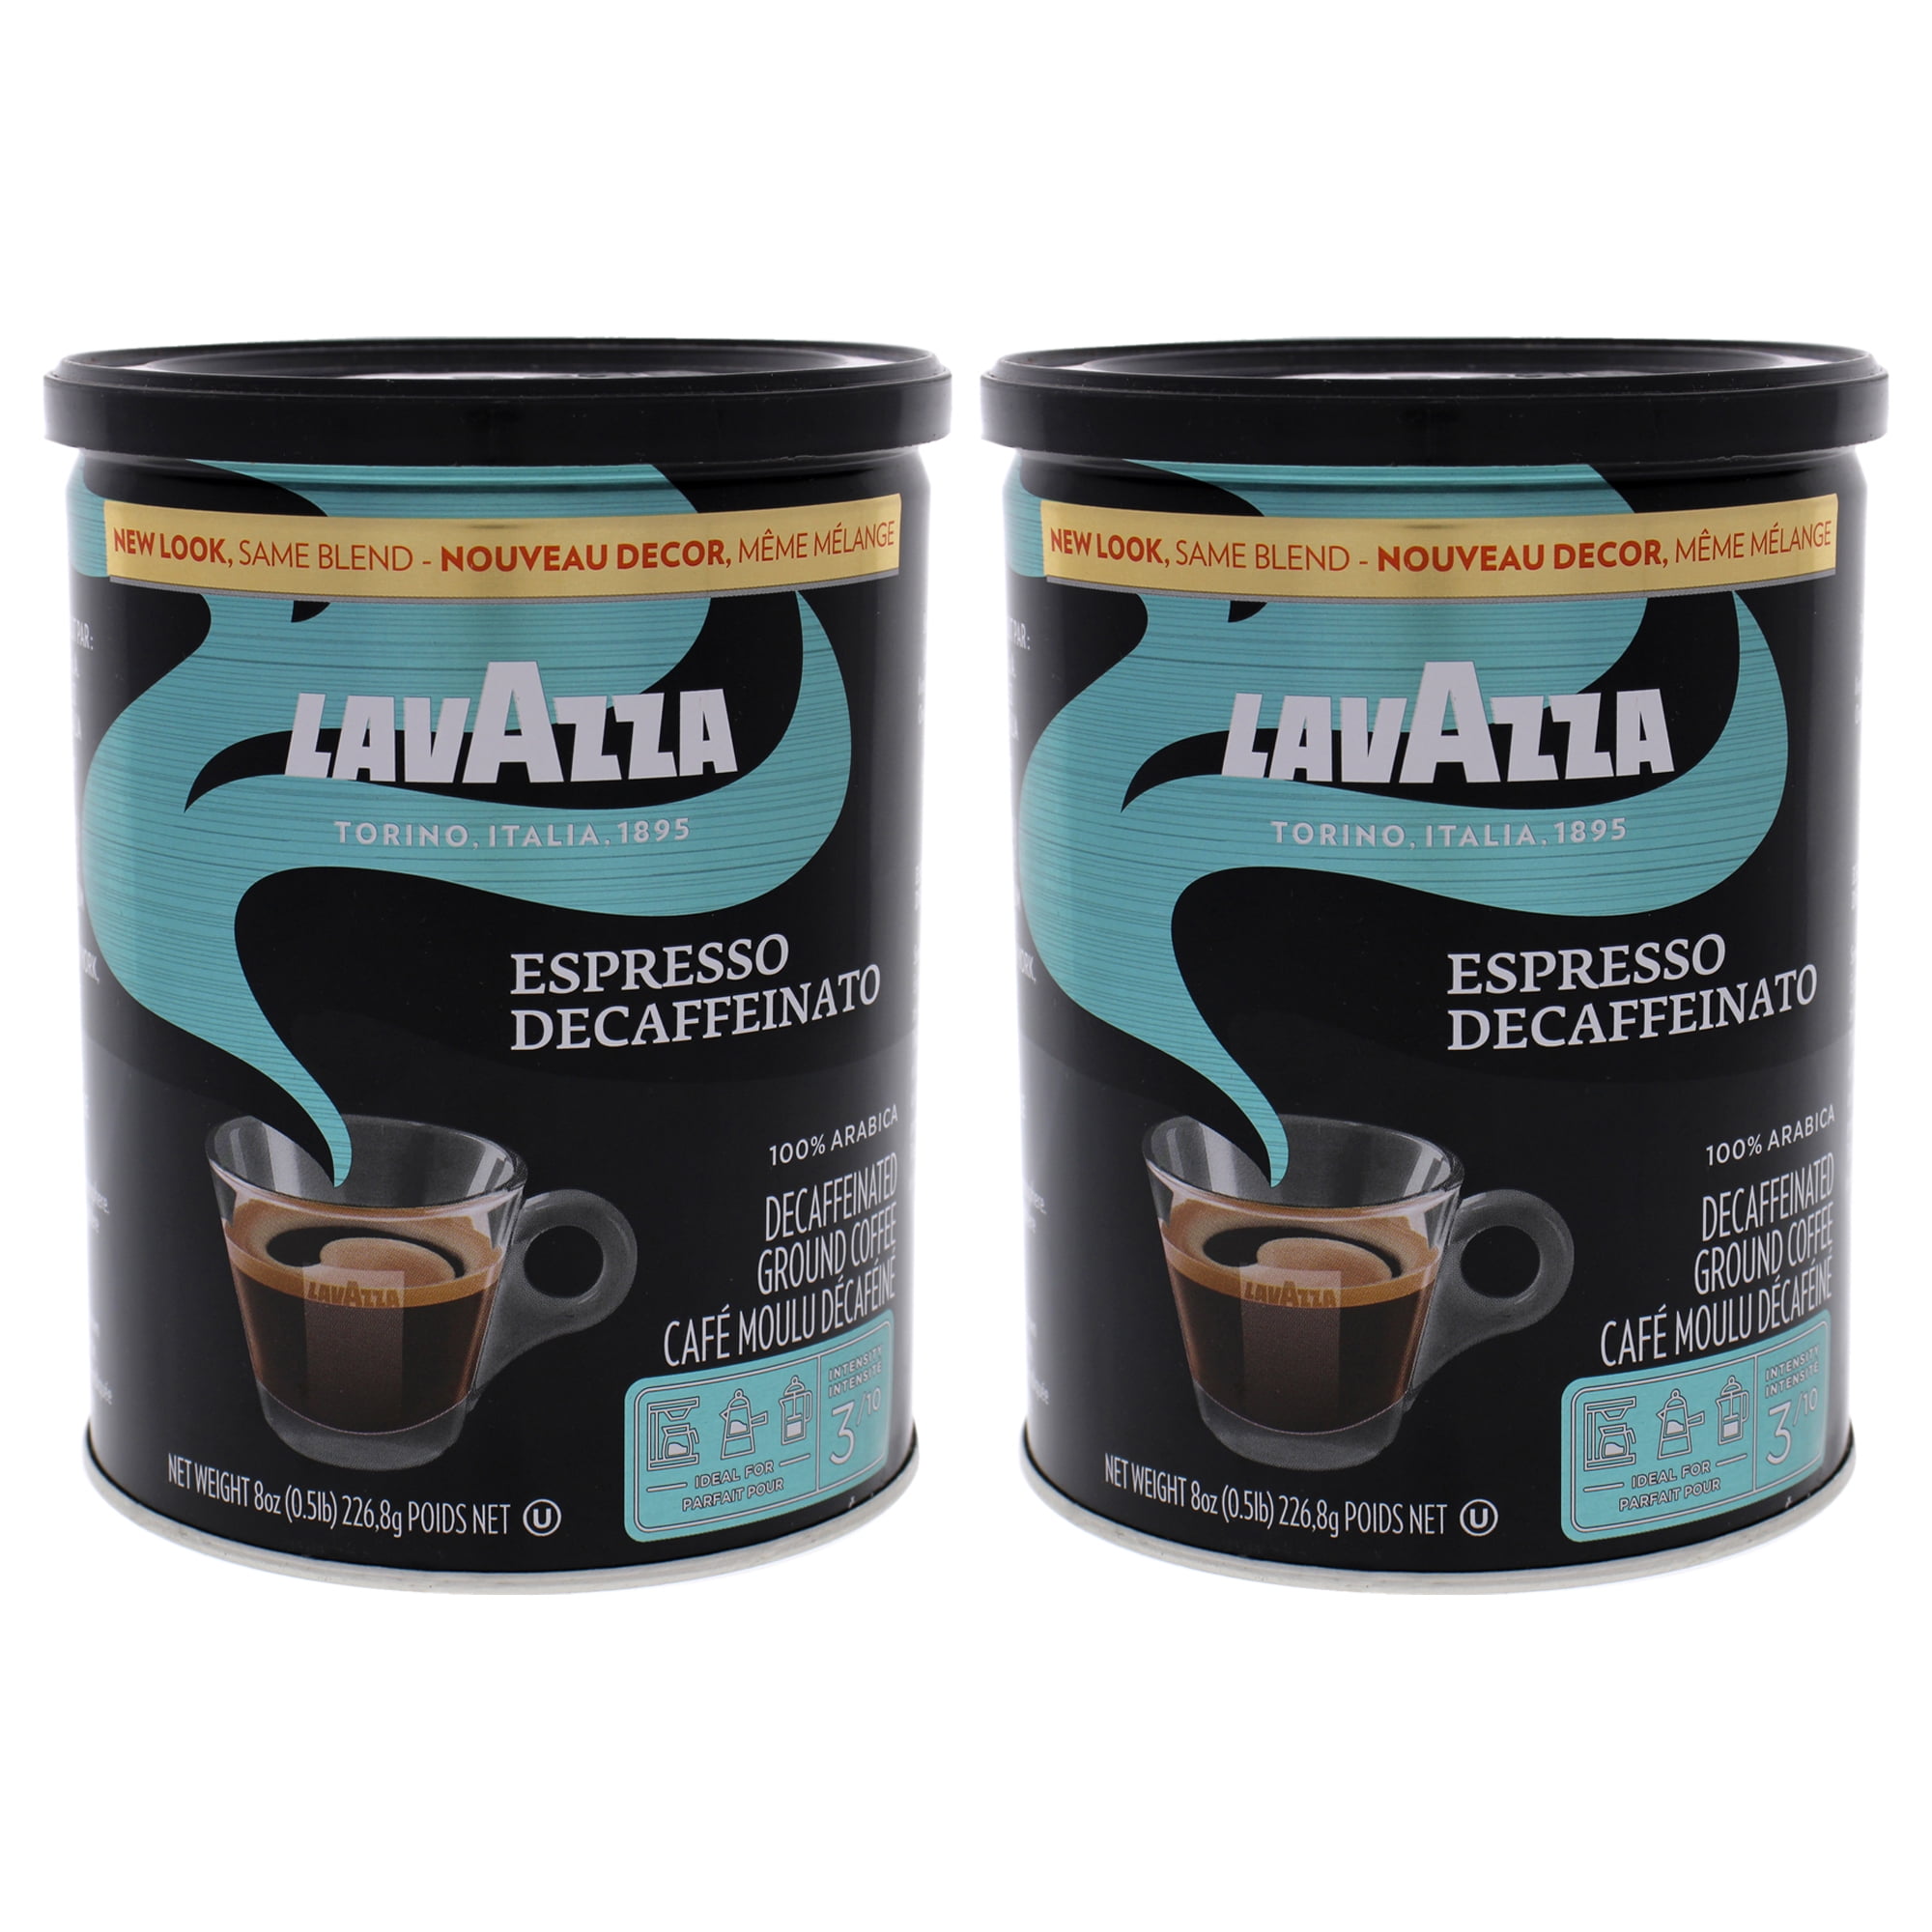 Lavazza Espresso Ground Coffee Medium Roast 8-Oz Can